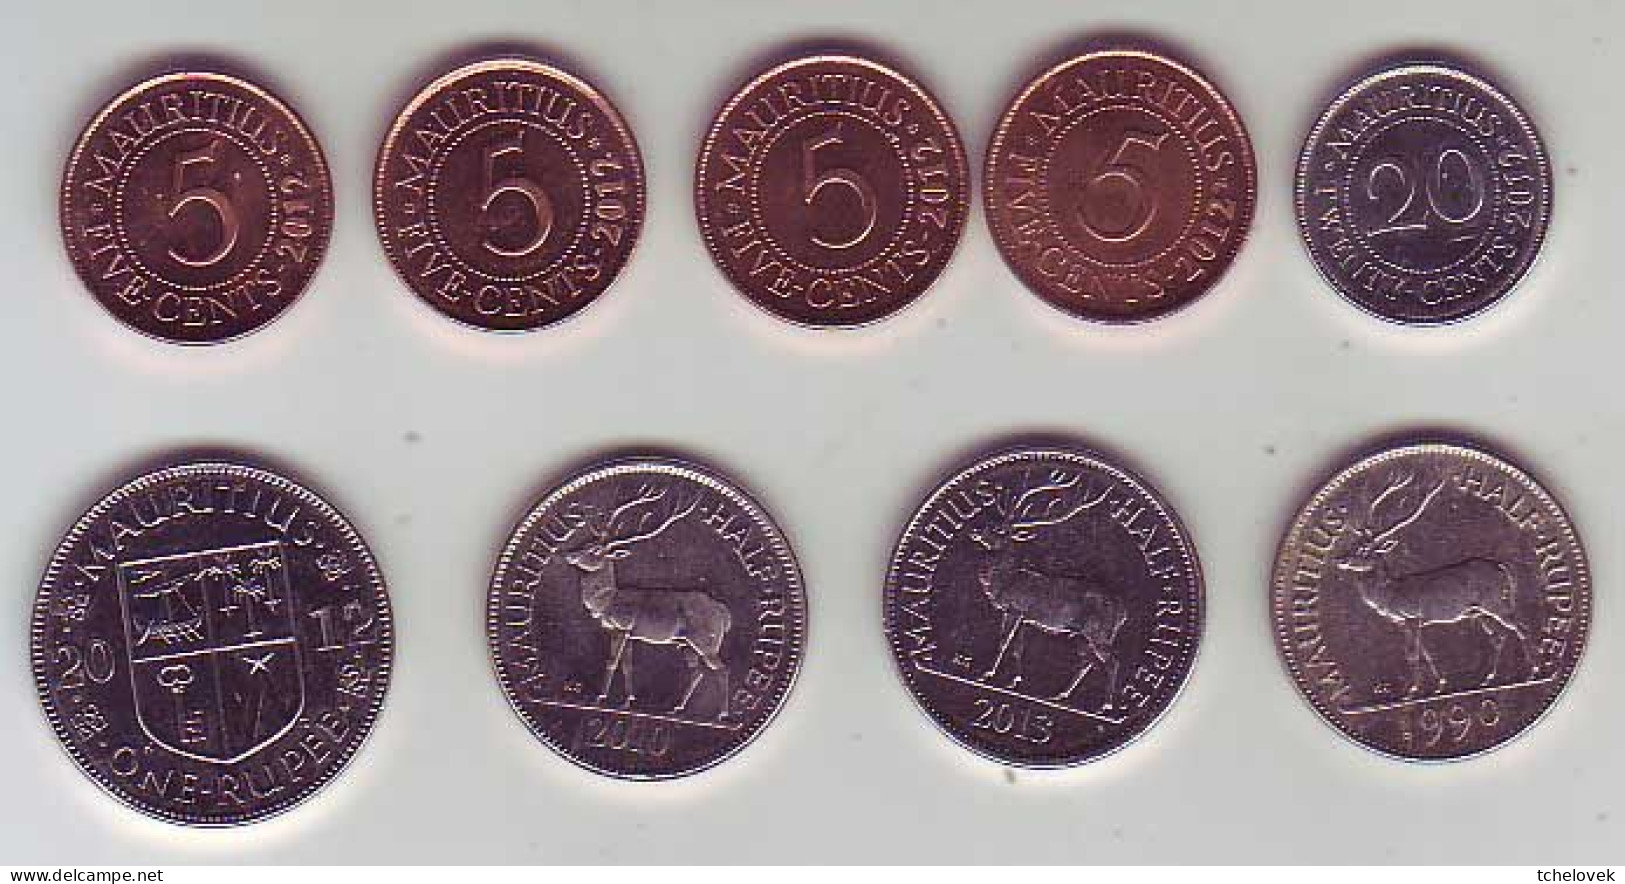 (Monnaies). Ile Maurice Mauritius Half Rupee 0.50 R 2009 & 1 R 2009, 5 c 2005 et 2007 & lot n°2